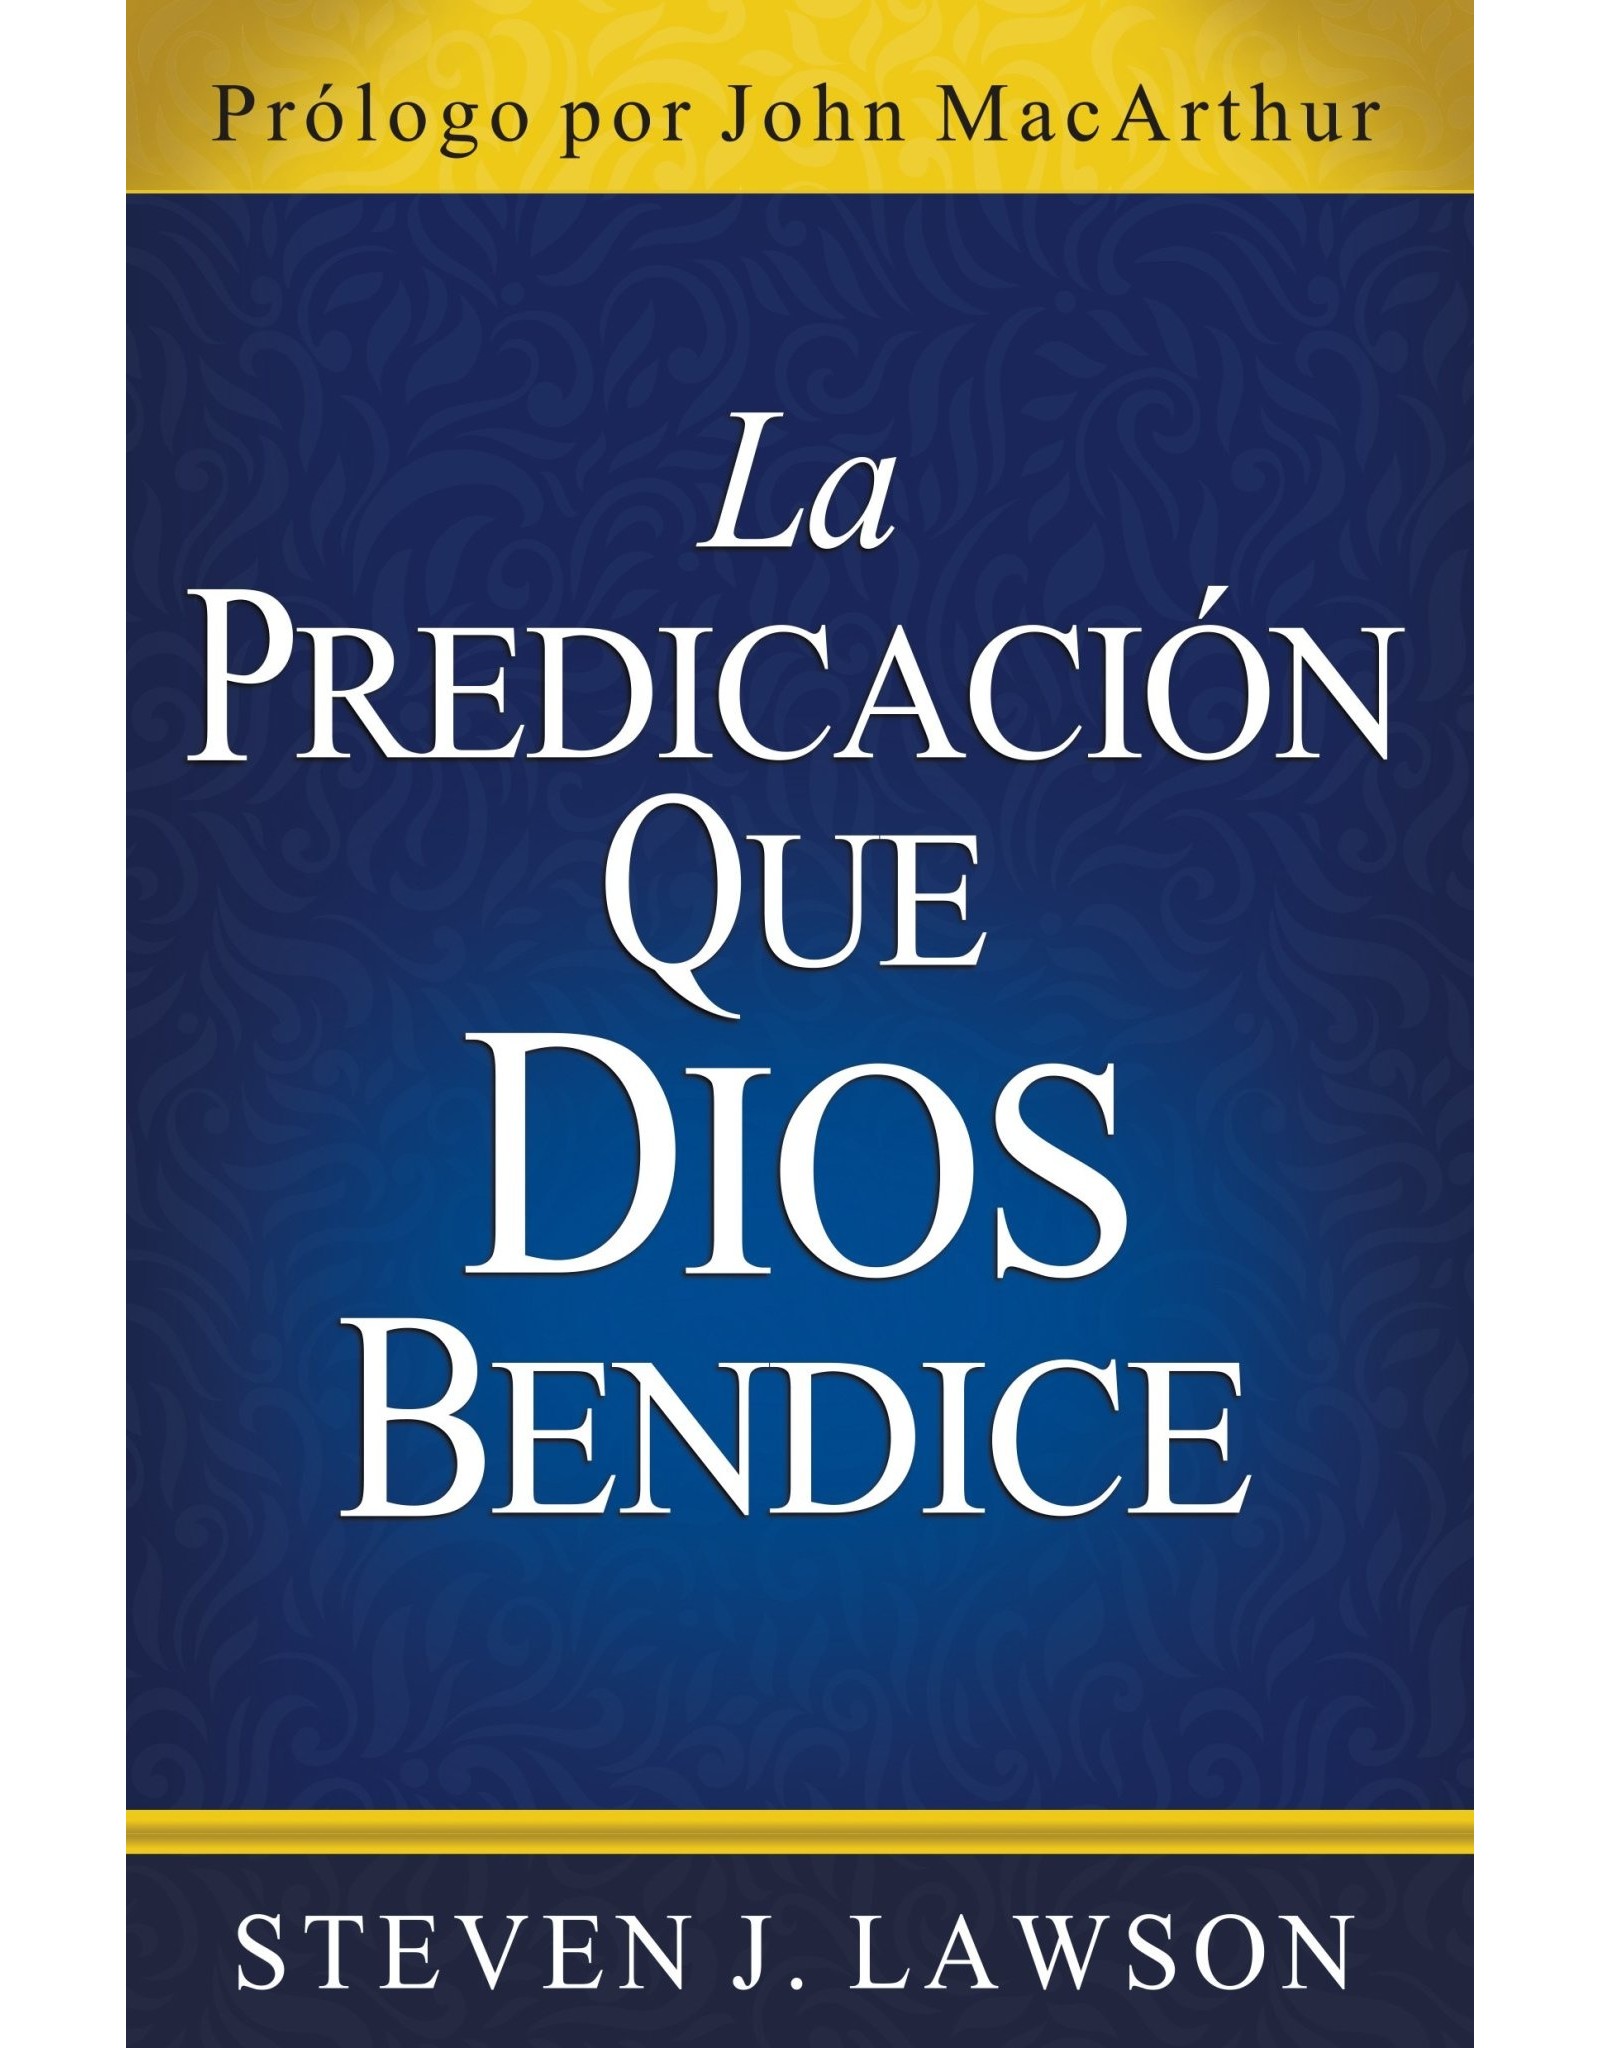 Poiema La Predicacion que Dios Bendice (The Kind of Preaching God Blesses)